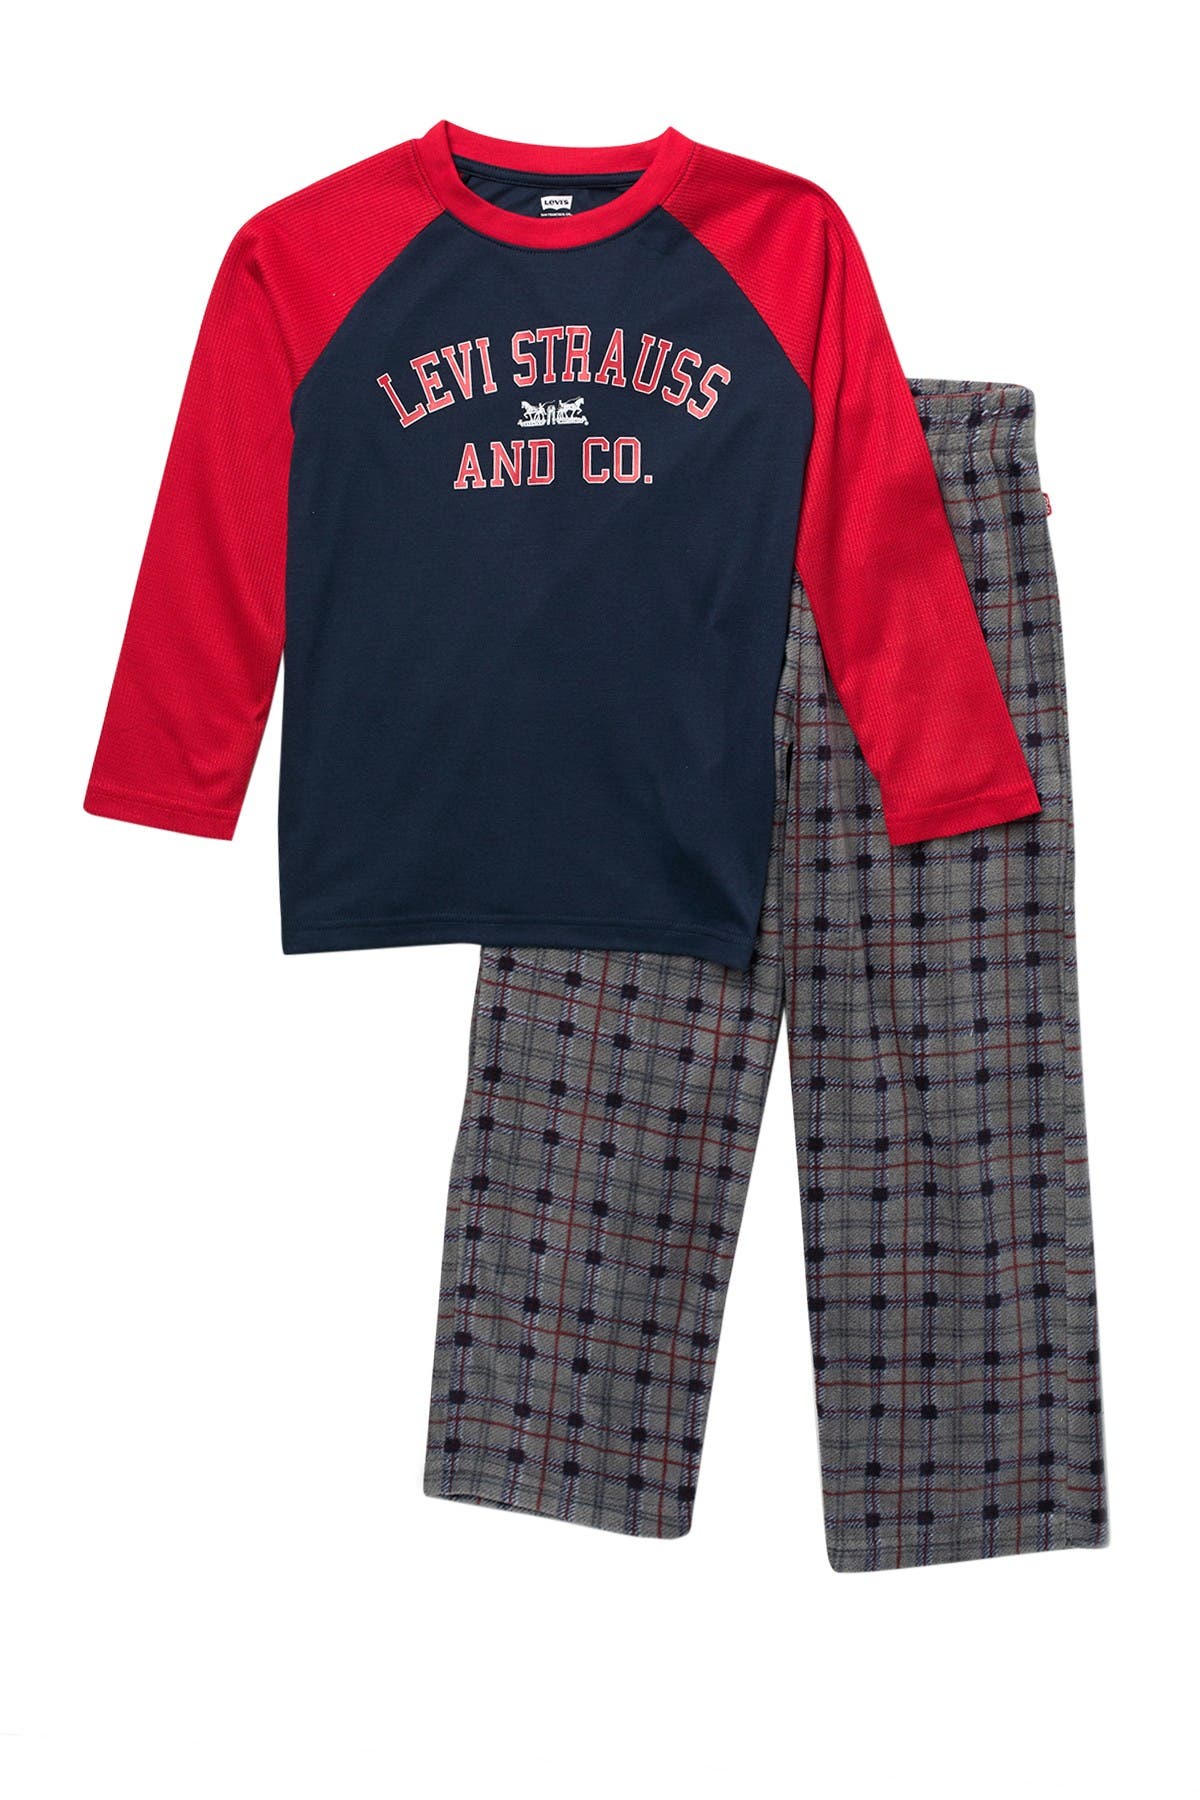 levis pajama shirt